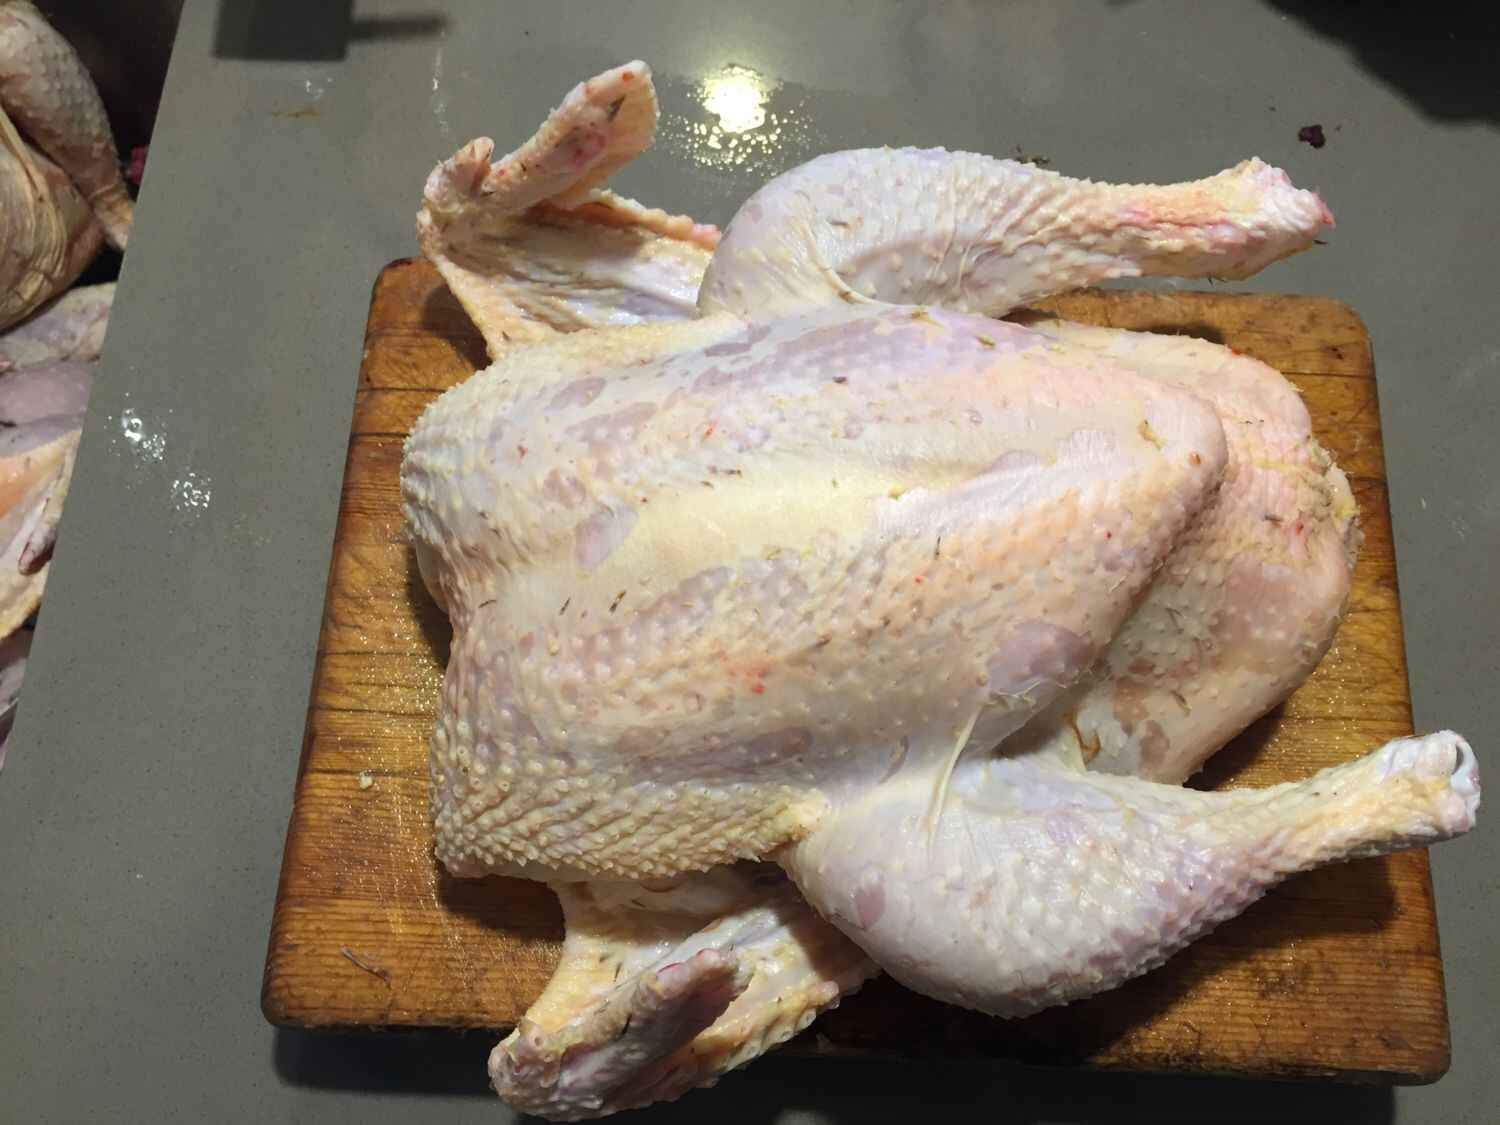 Butchered meat chicken